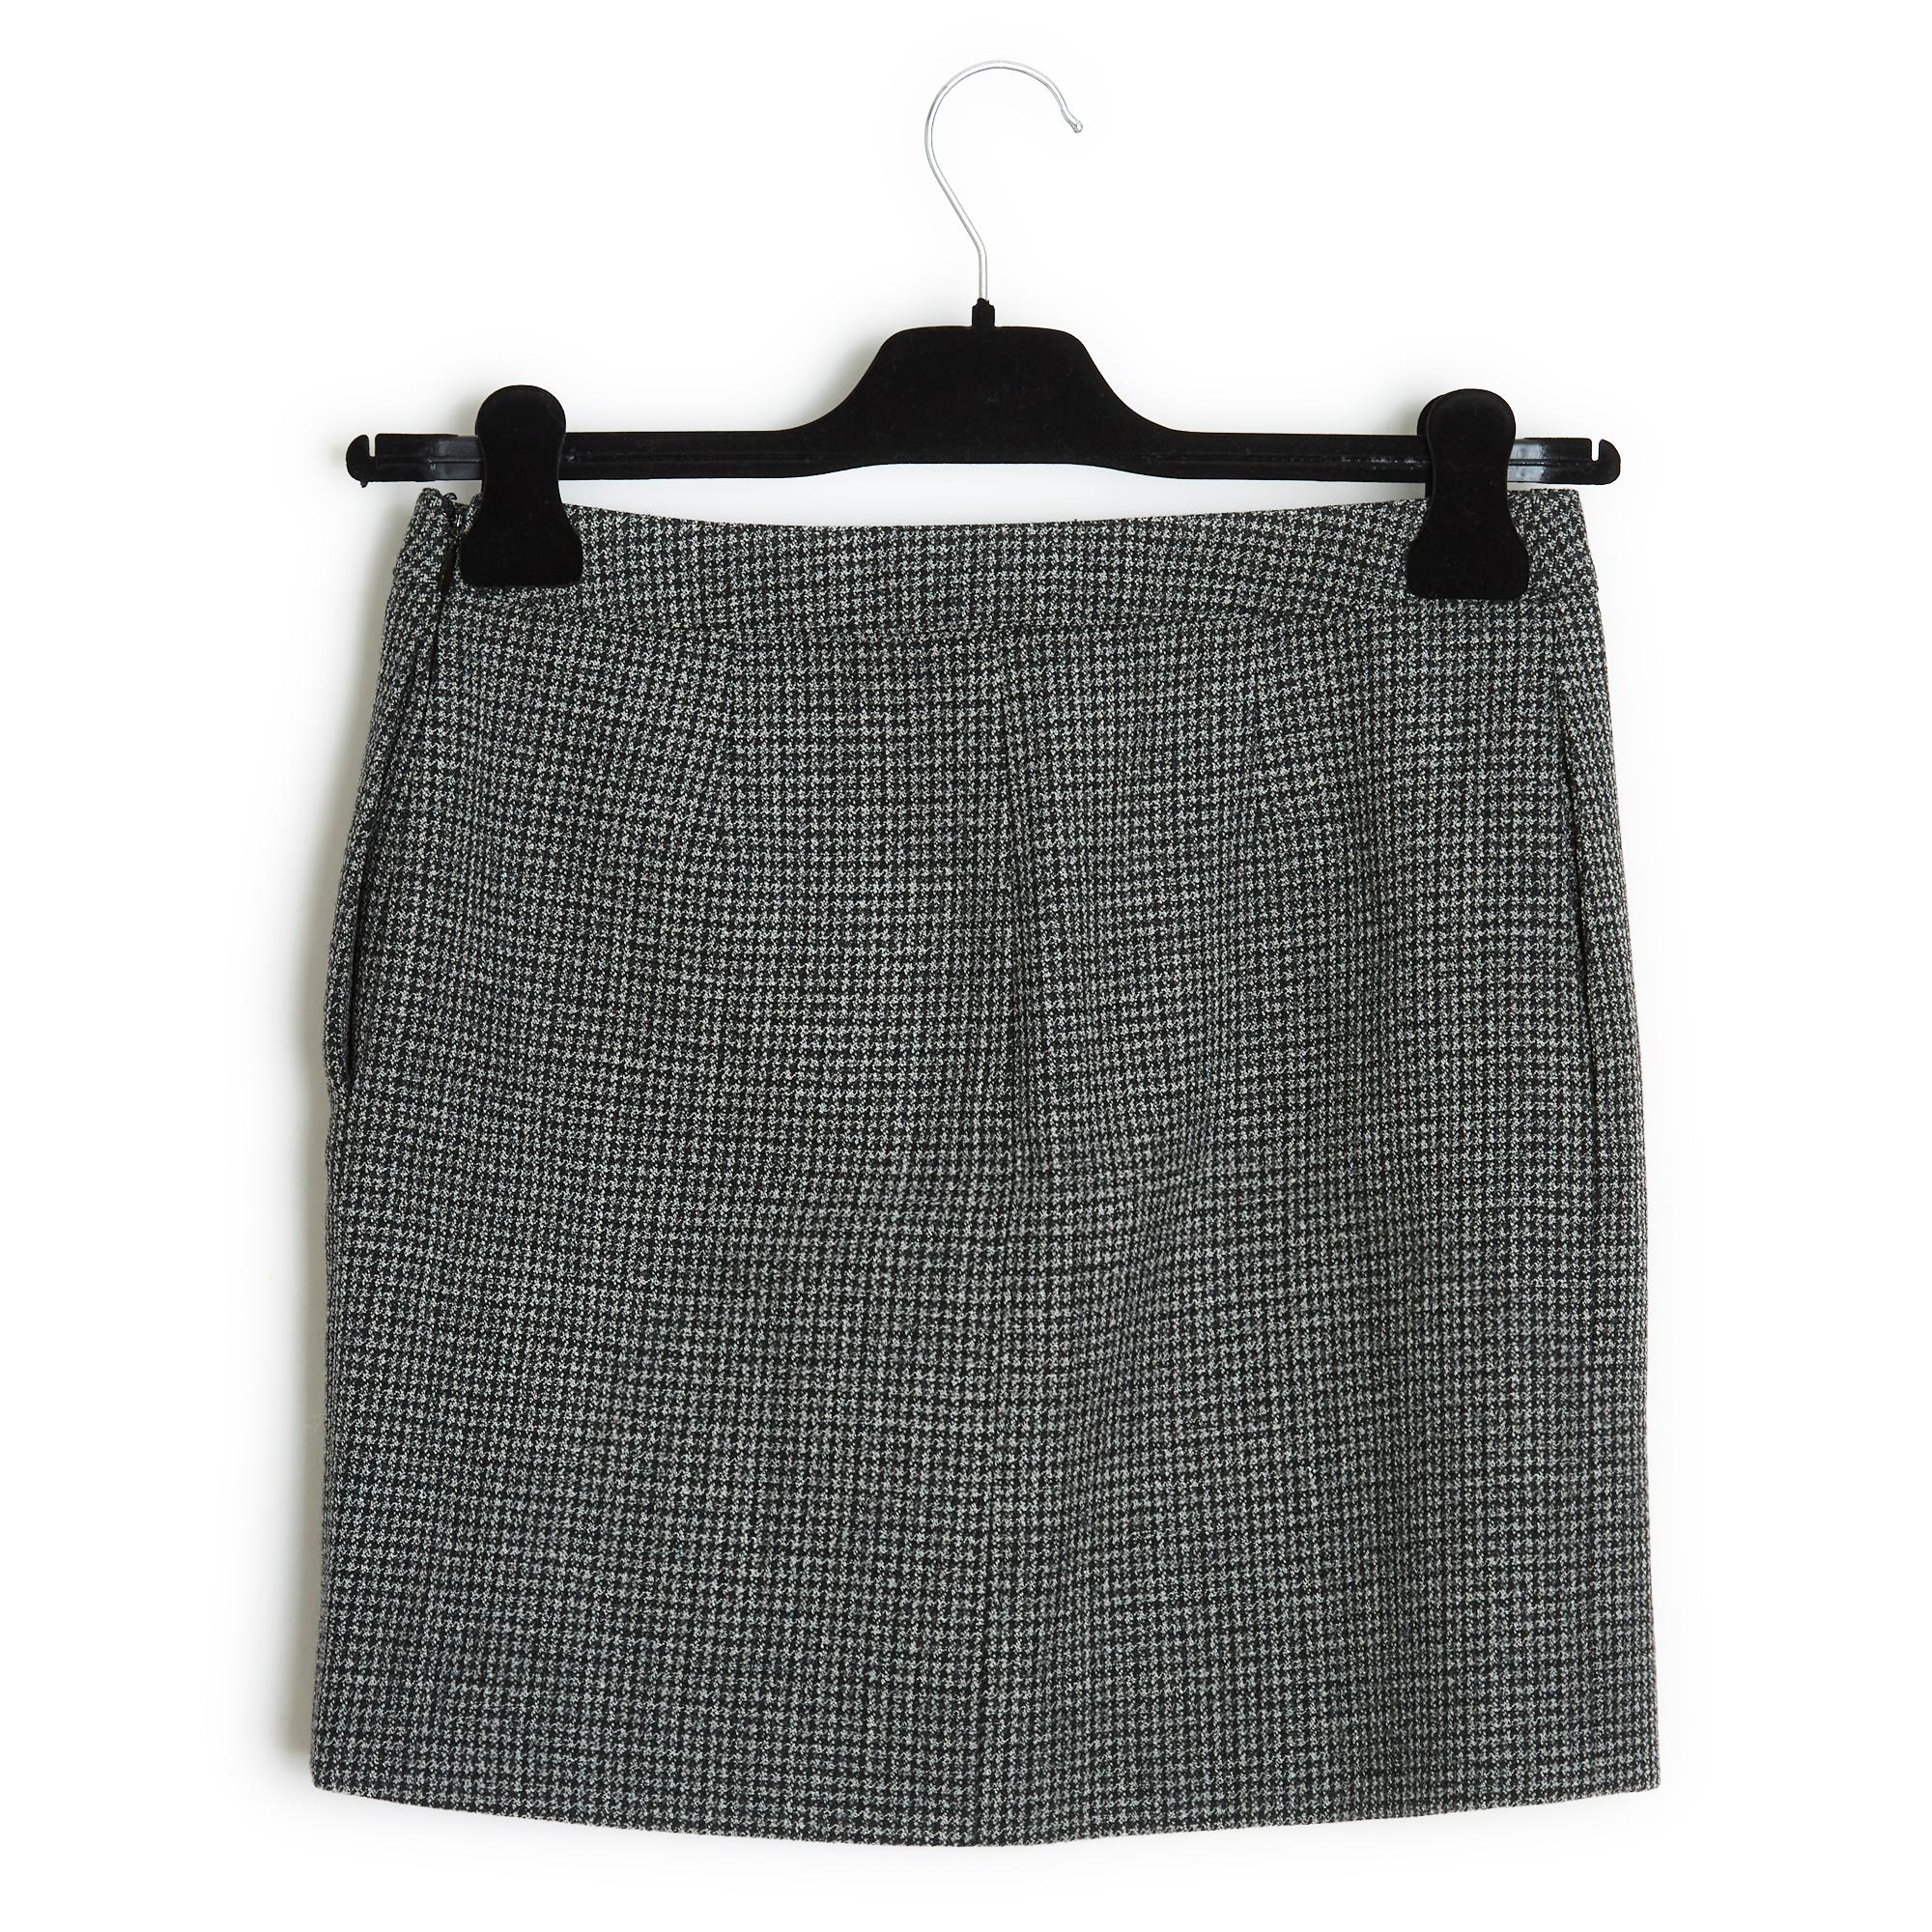 2015 Slimane Saint Laurent Dark Houndstooth Mini Skirt In Excellent Condition For Sale In PARIS, FR